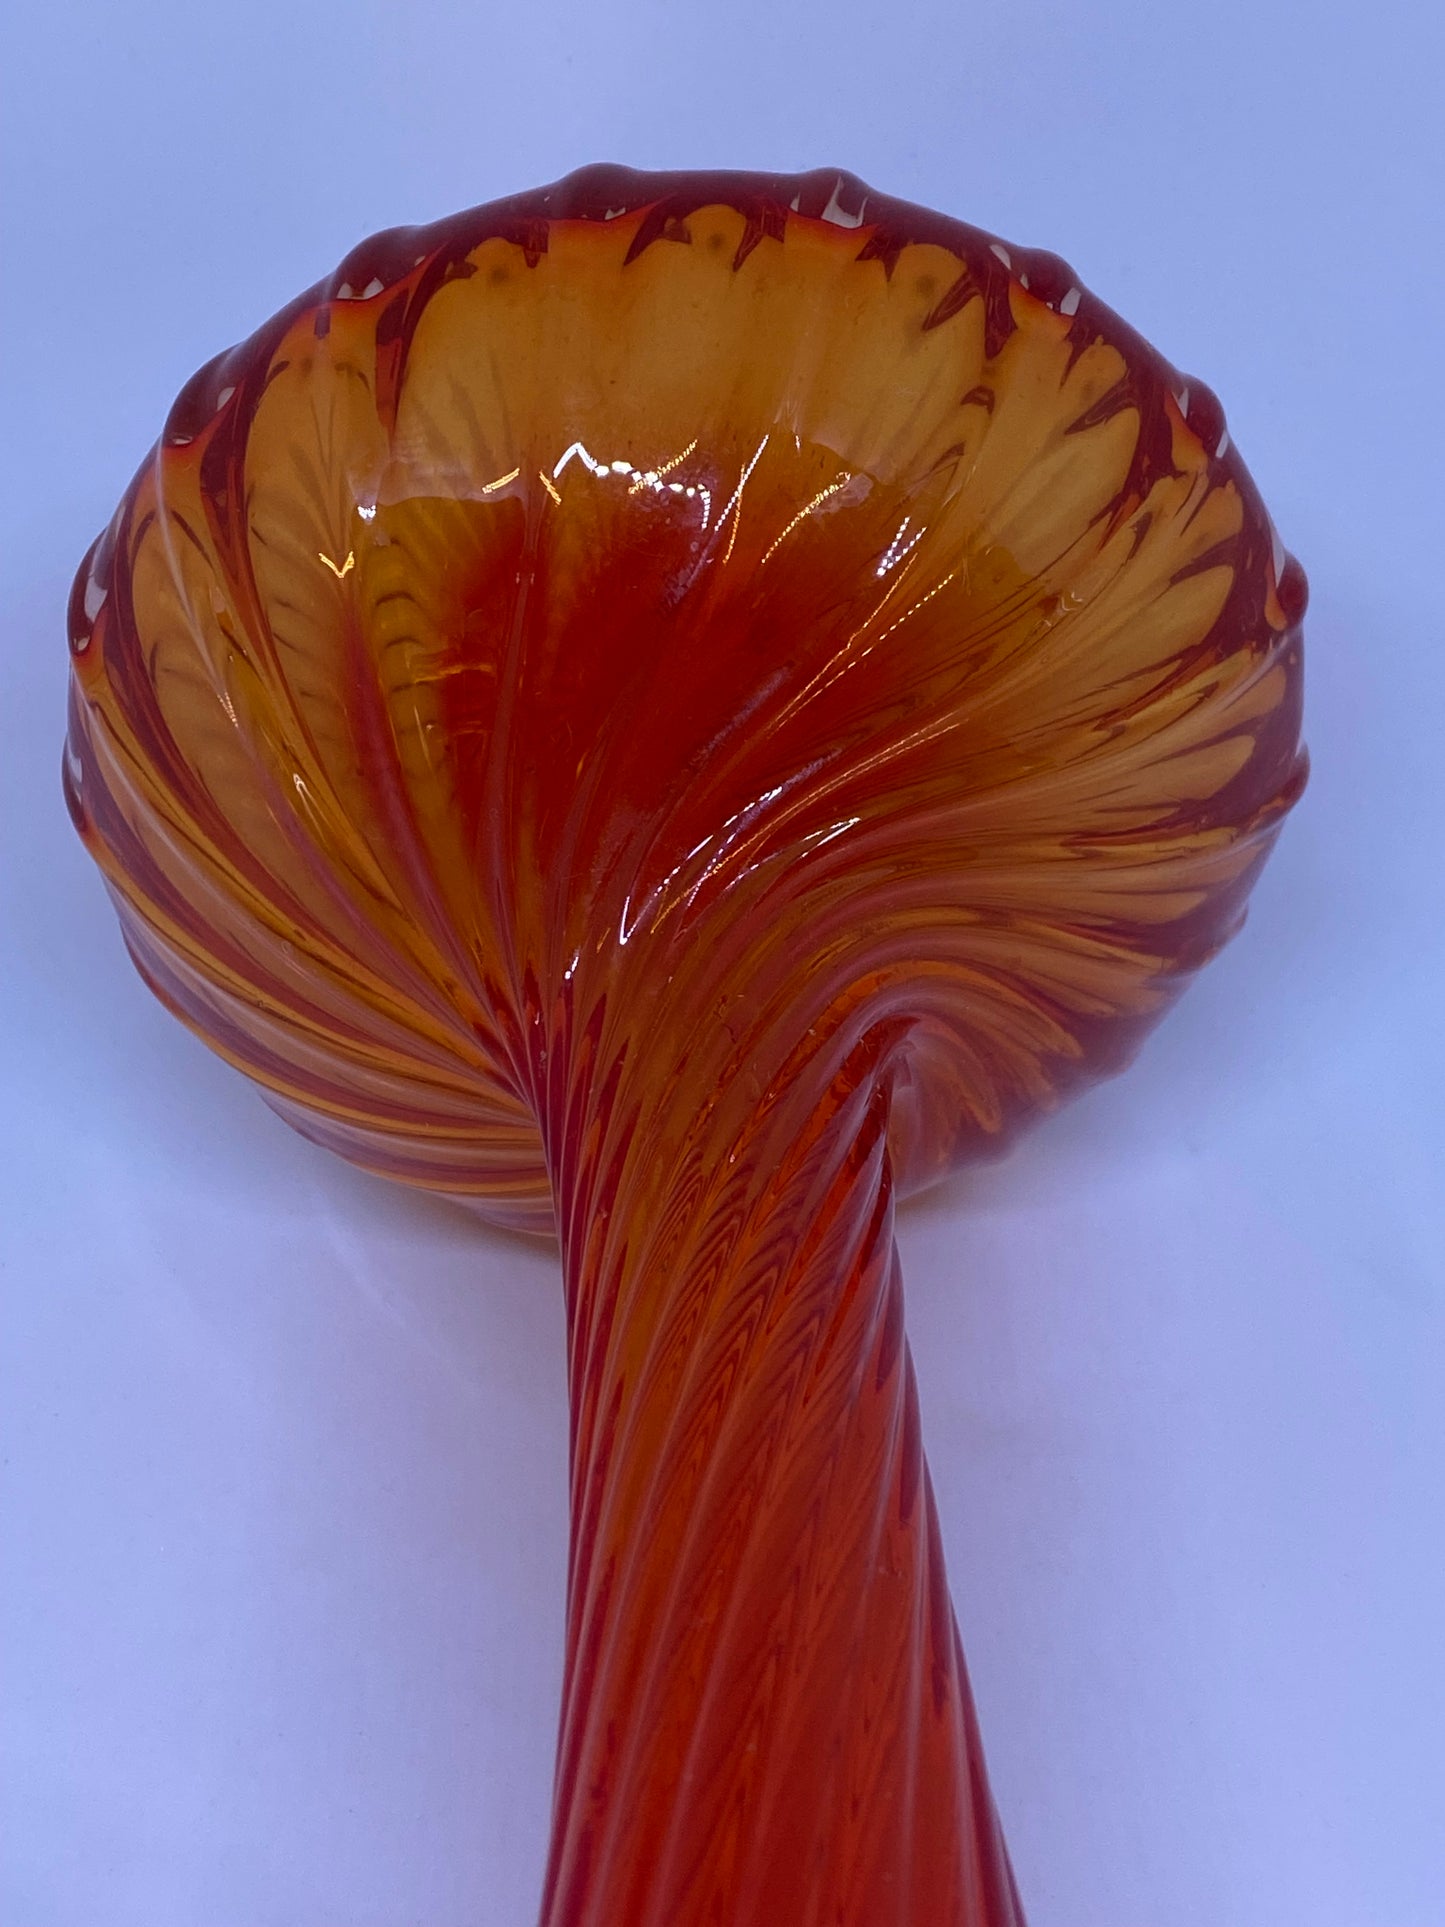 Amberina swirl vase